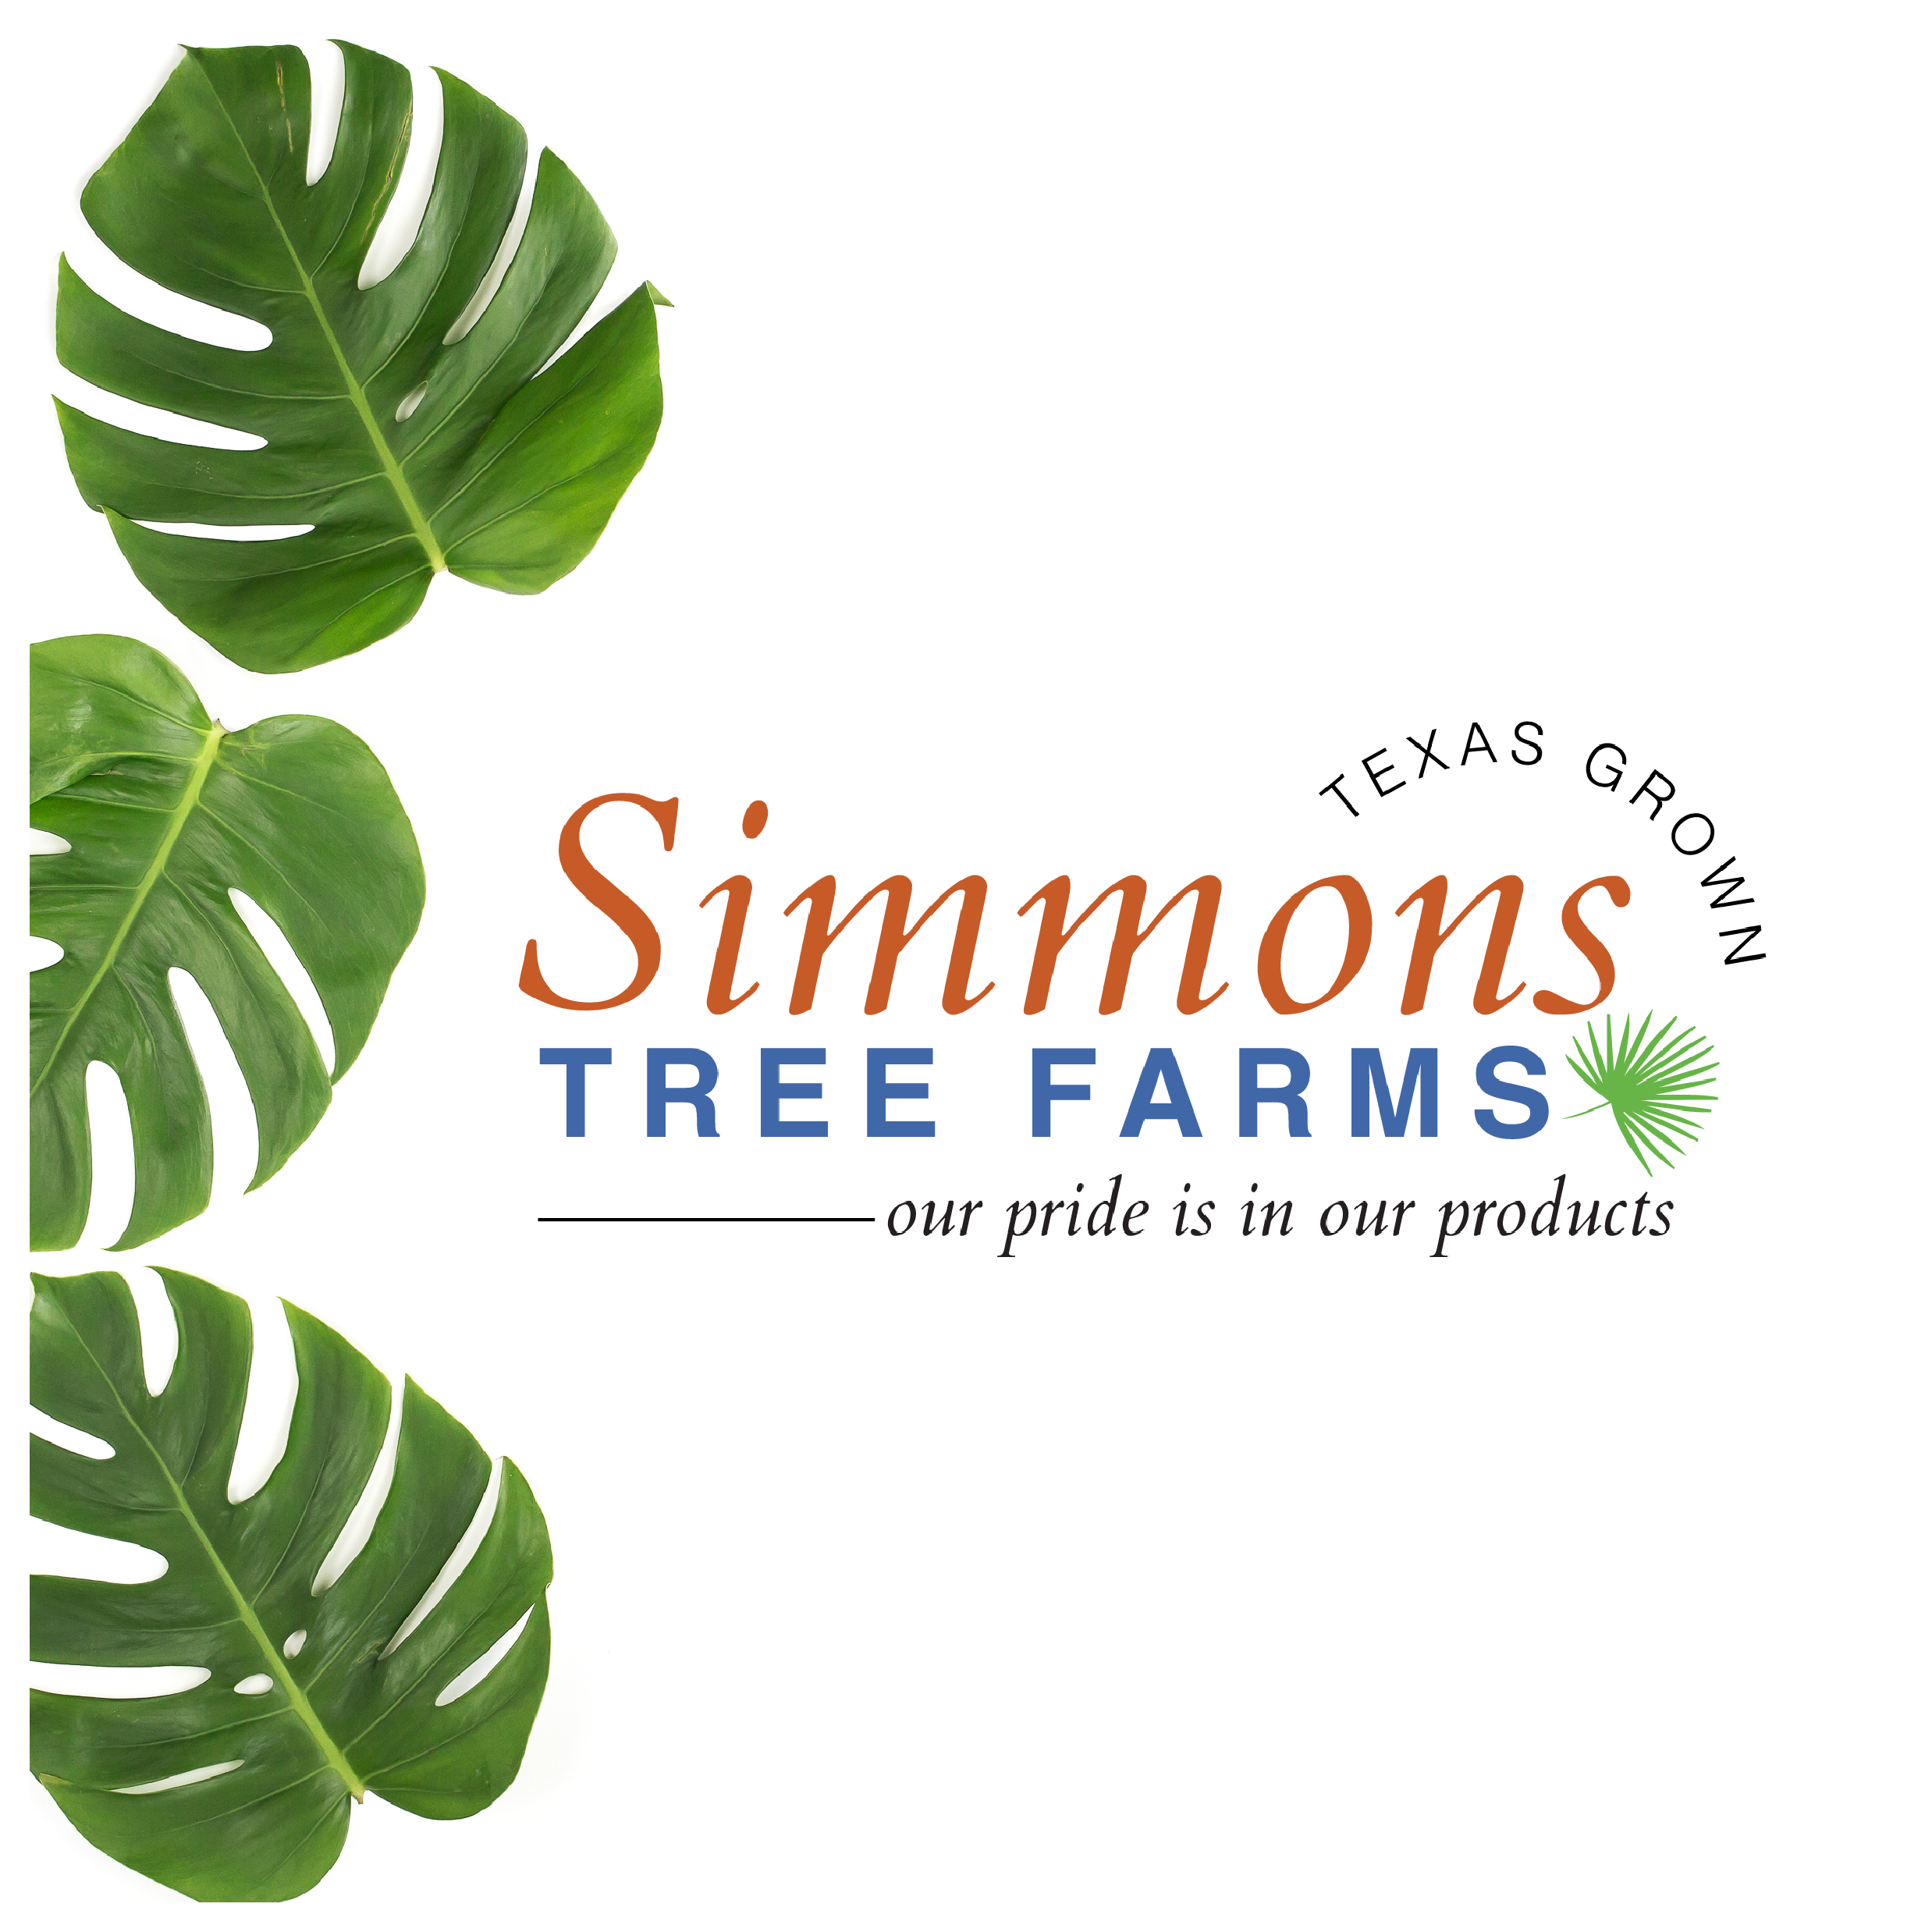 New Brand: Simmons Tree Farms